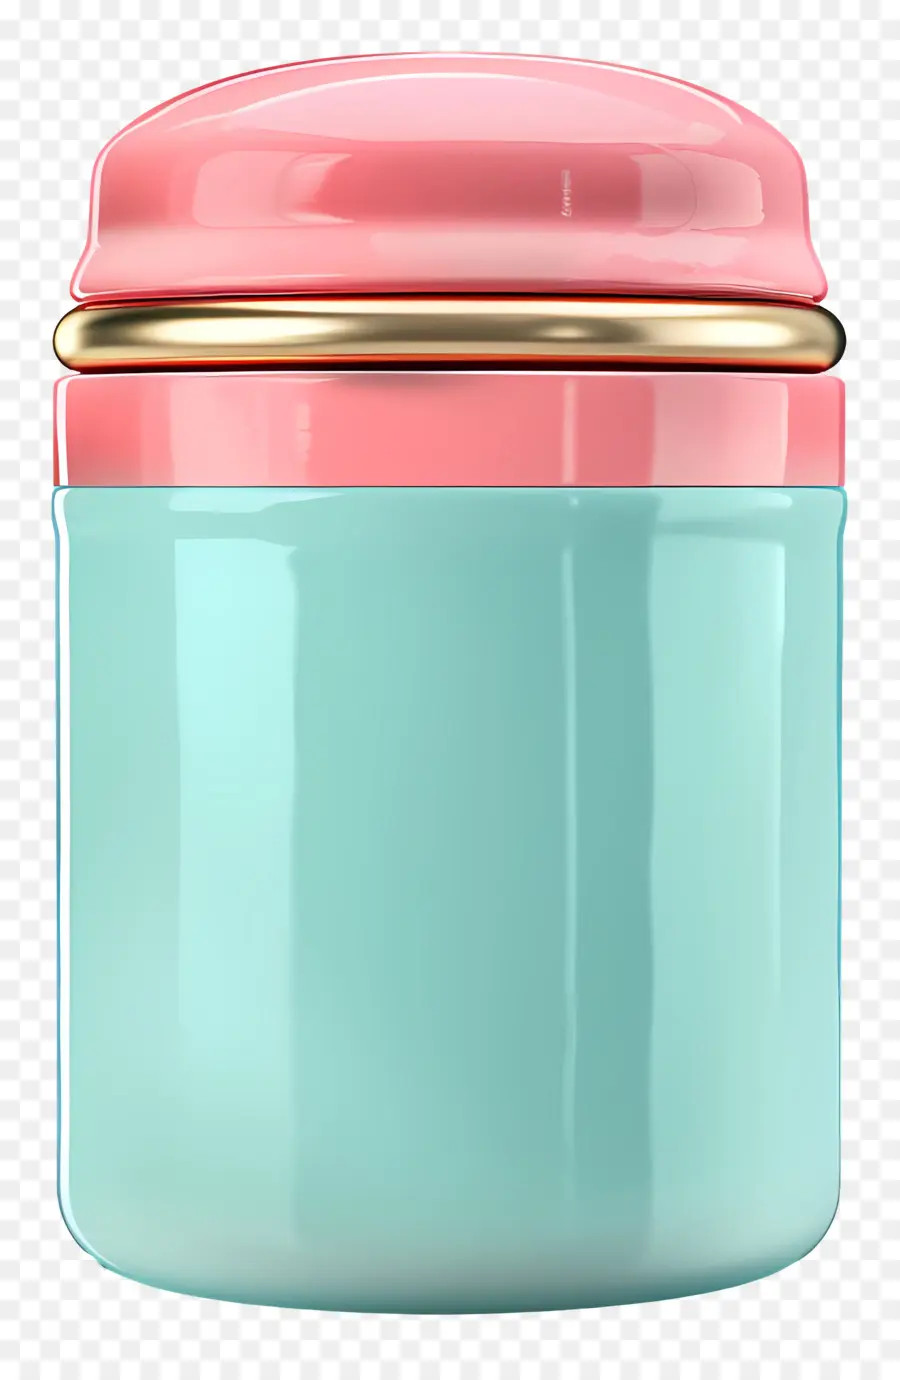 metal storage jar transparent glass jar blue and pink exterior mystery object unidentified item